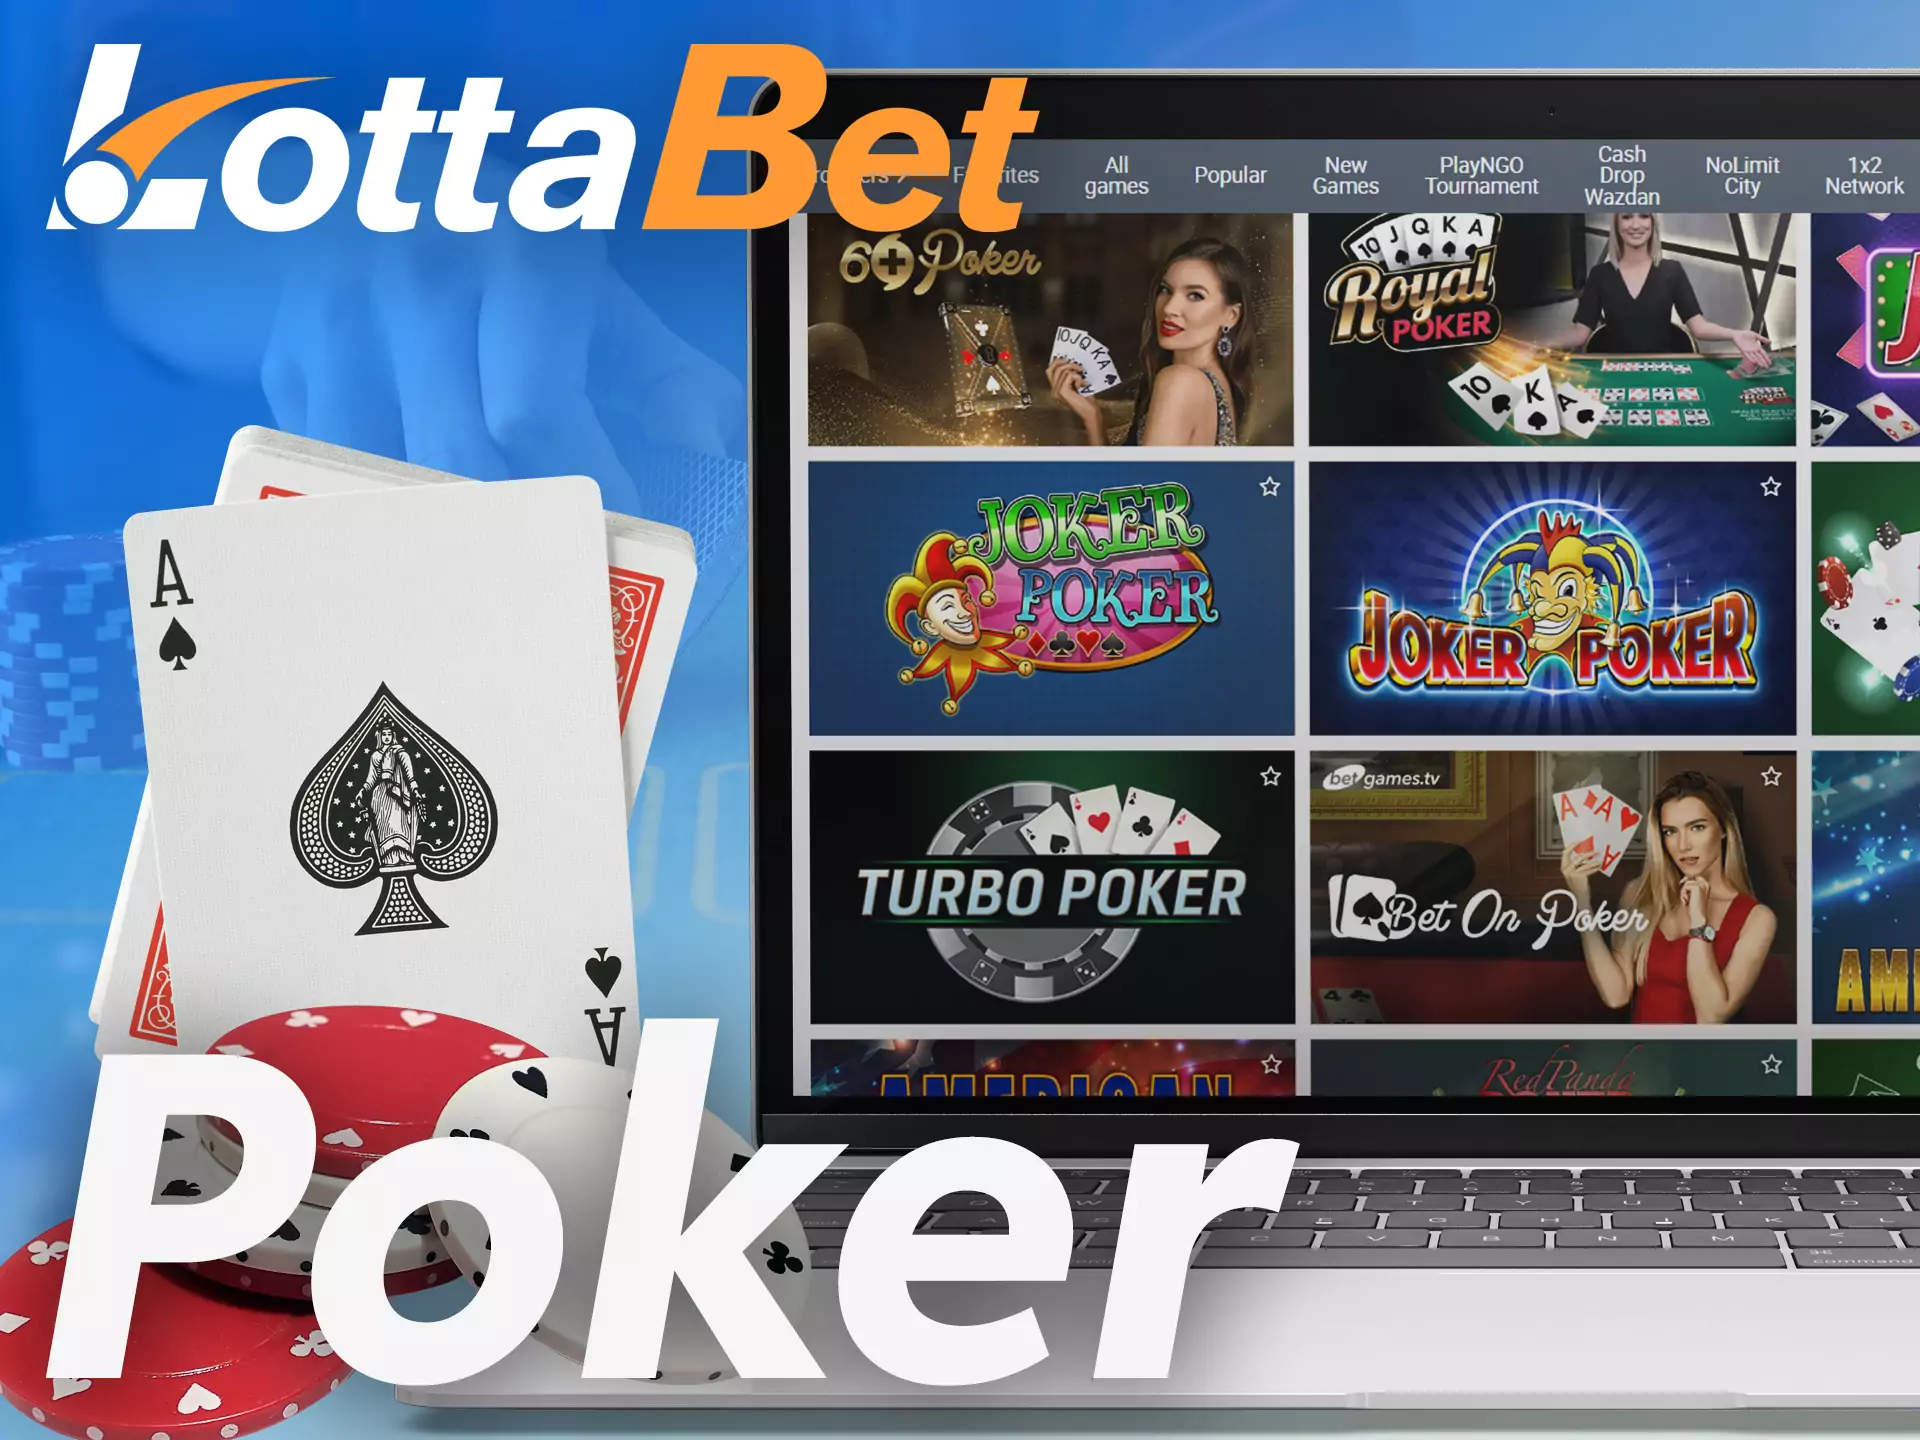 Casino fans of Lottabet especially love Poker rooms.